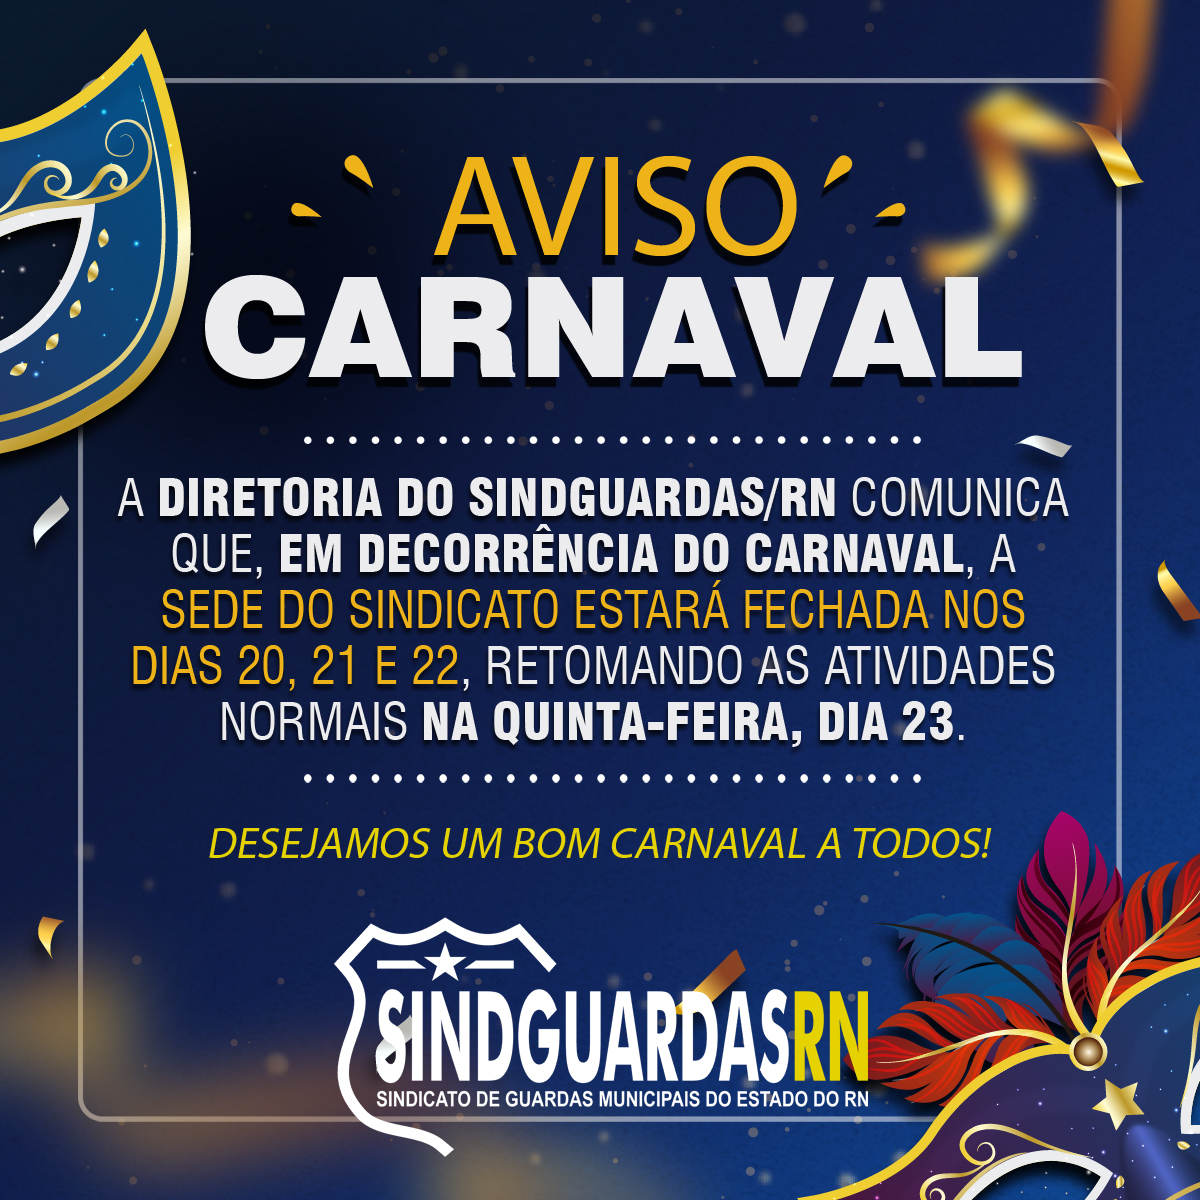 Sindguardas/RN informa sobre funcionamento durante o Carnaval